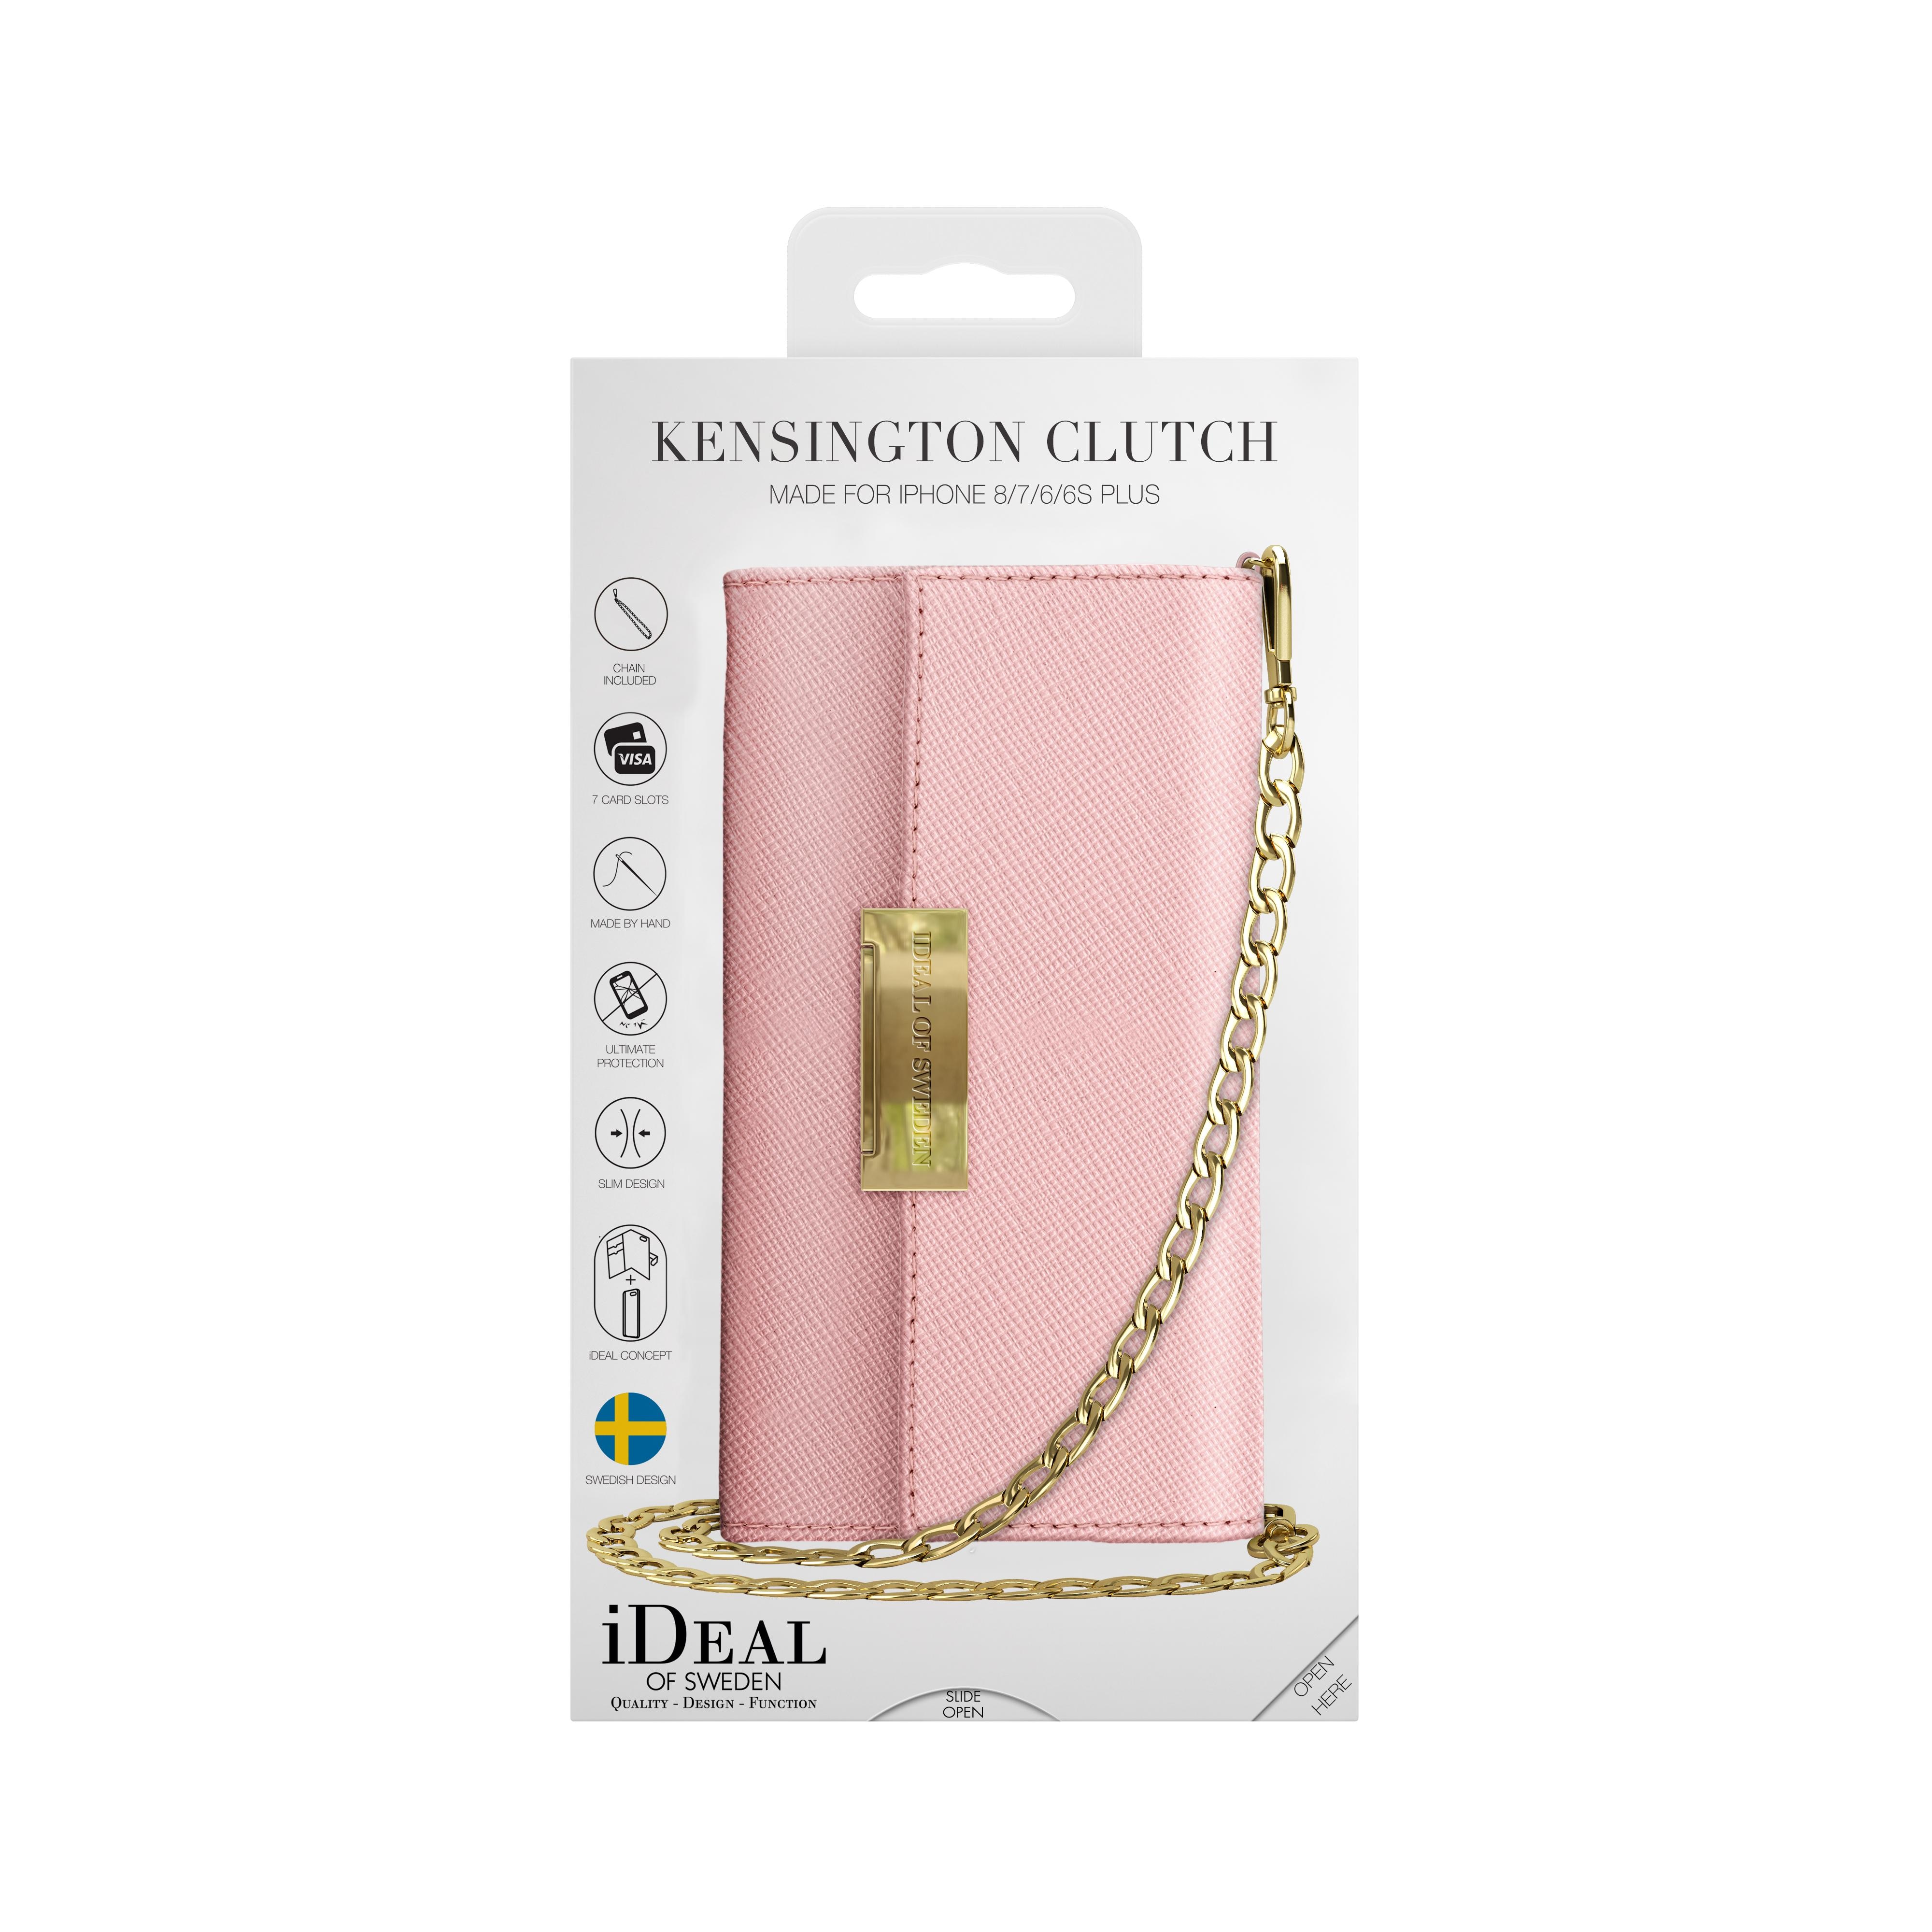 Kensington Clutch iPhone 6/6S/7/8 Plus Pink